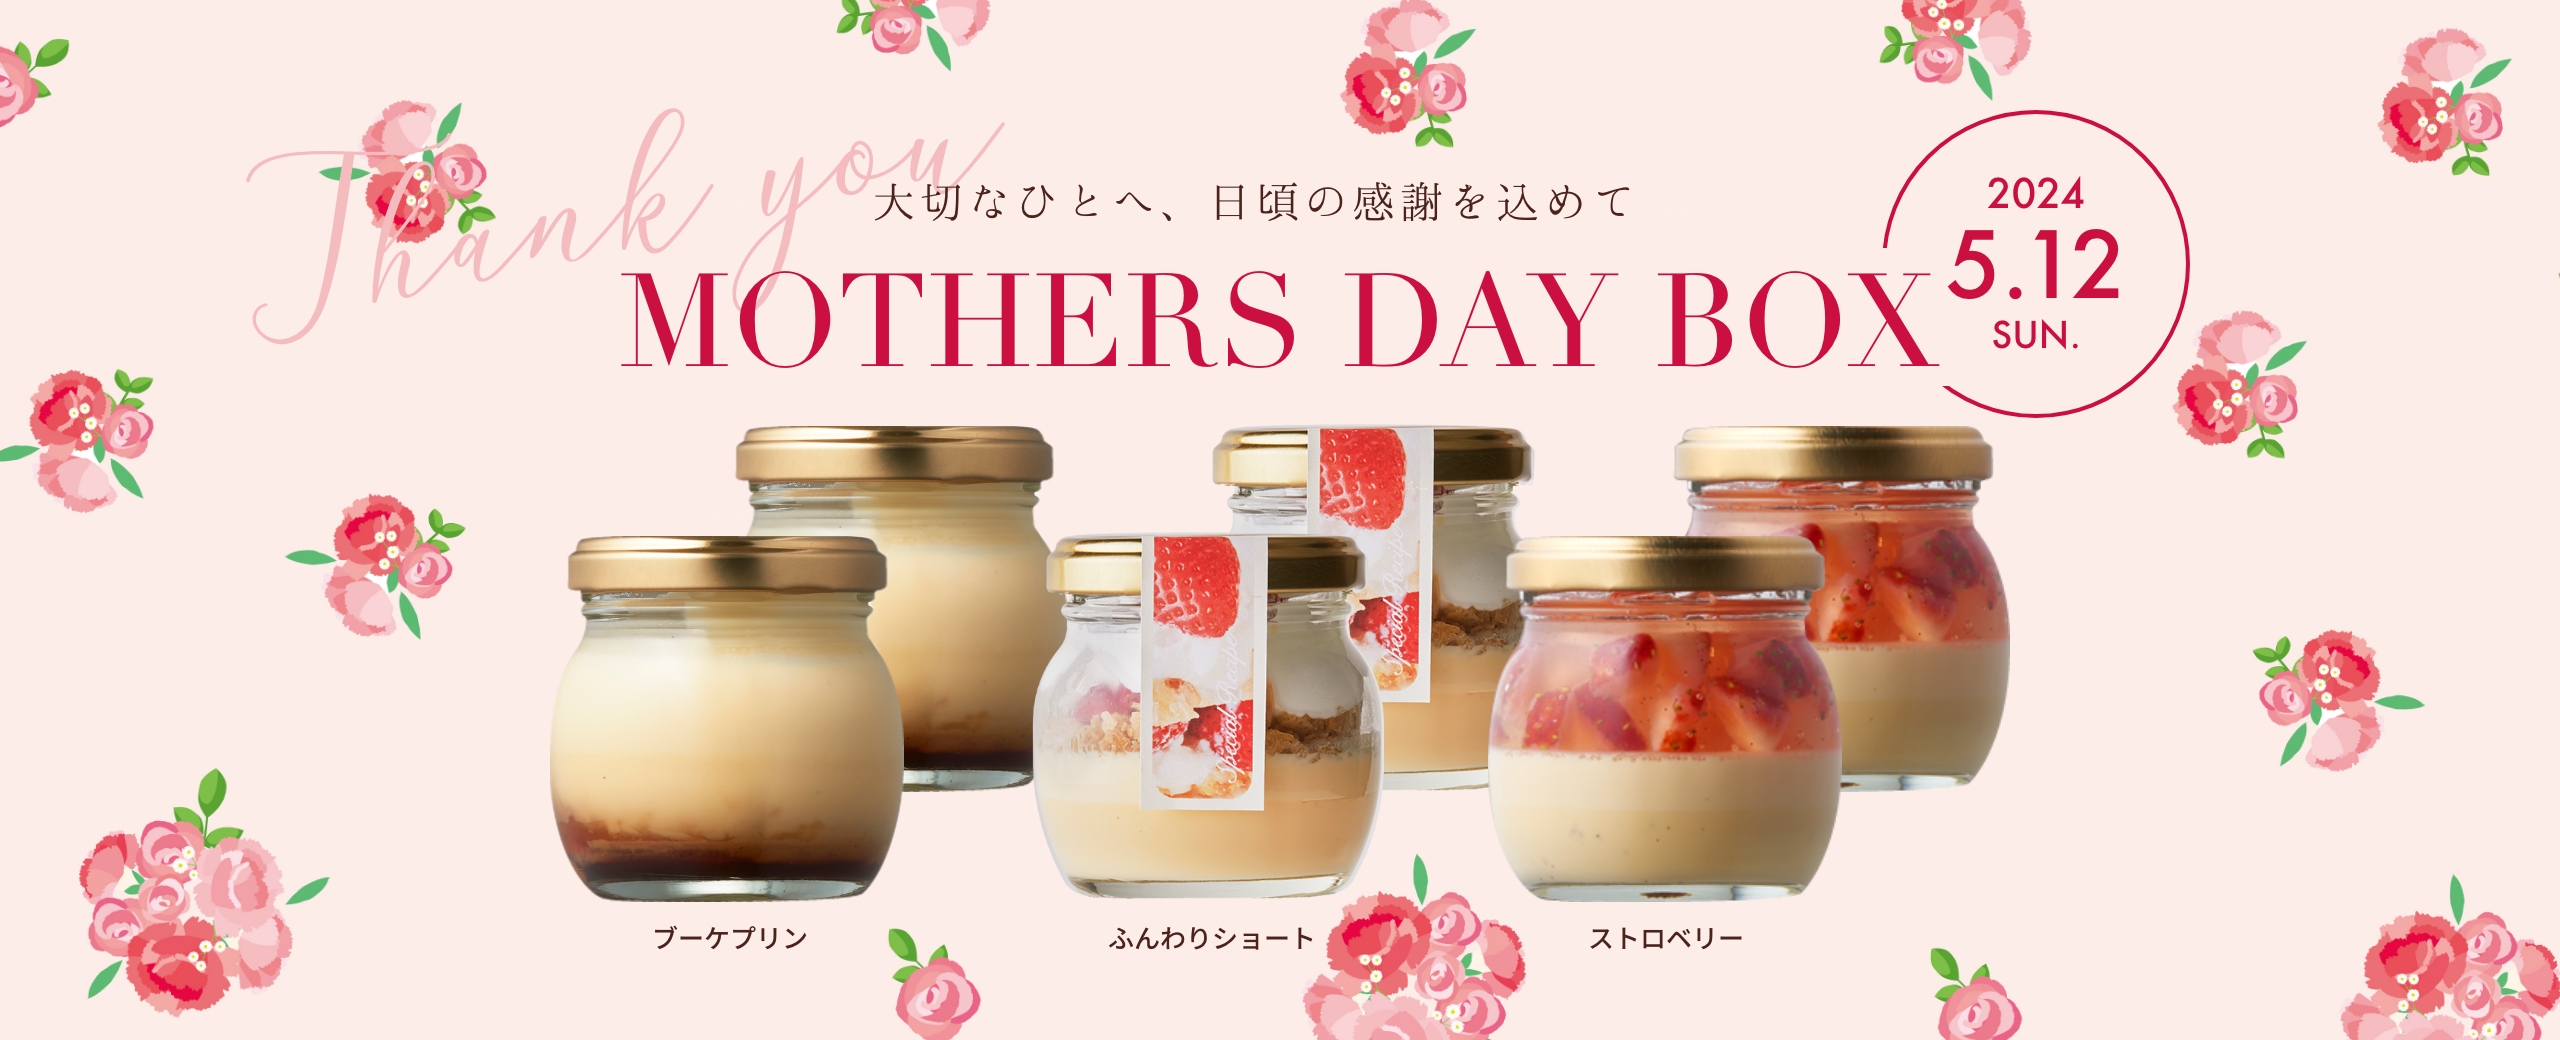 vuke Mother’s Day Box